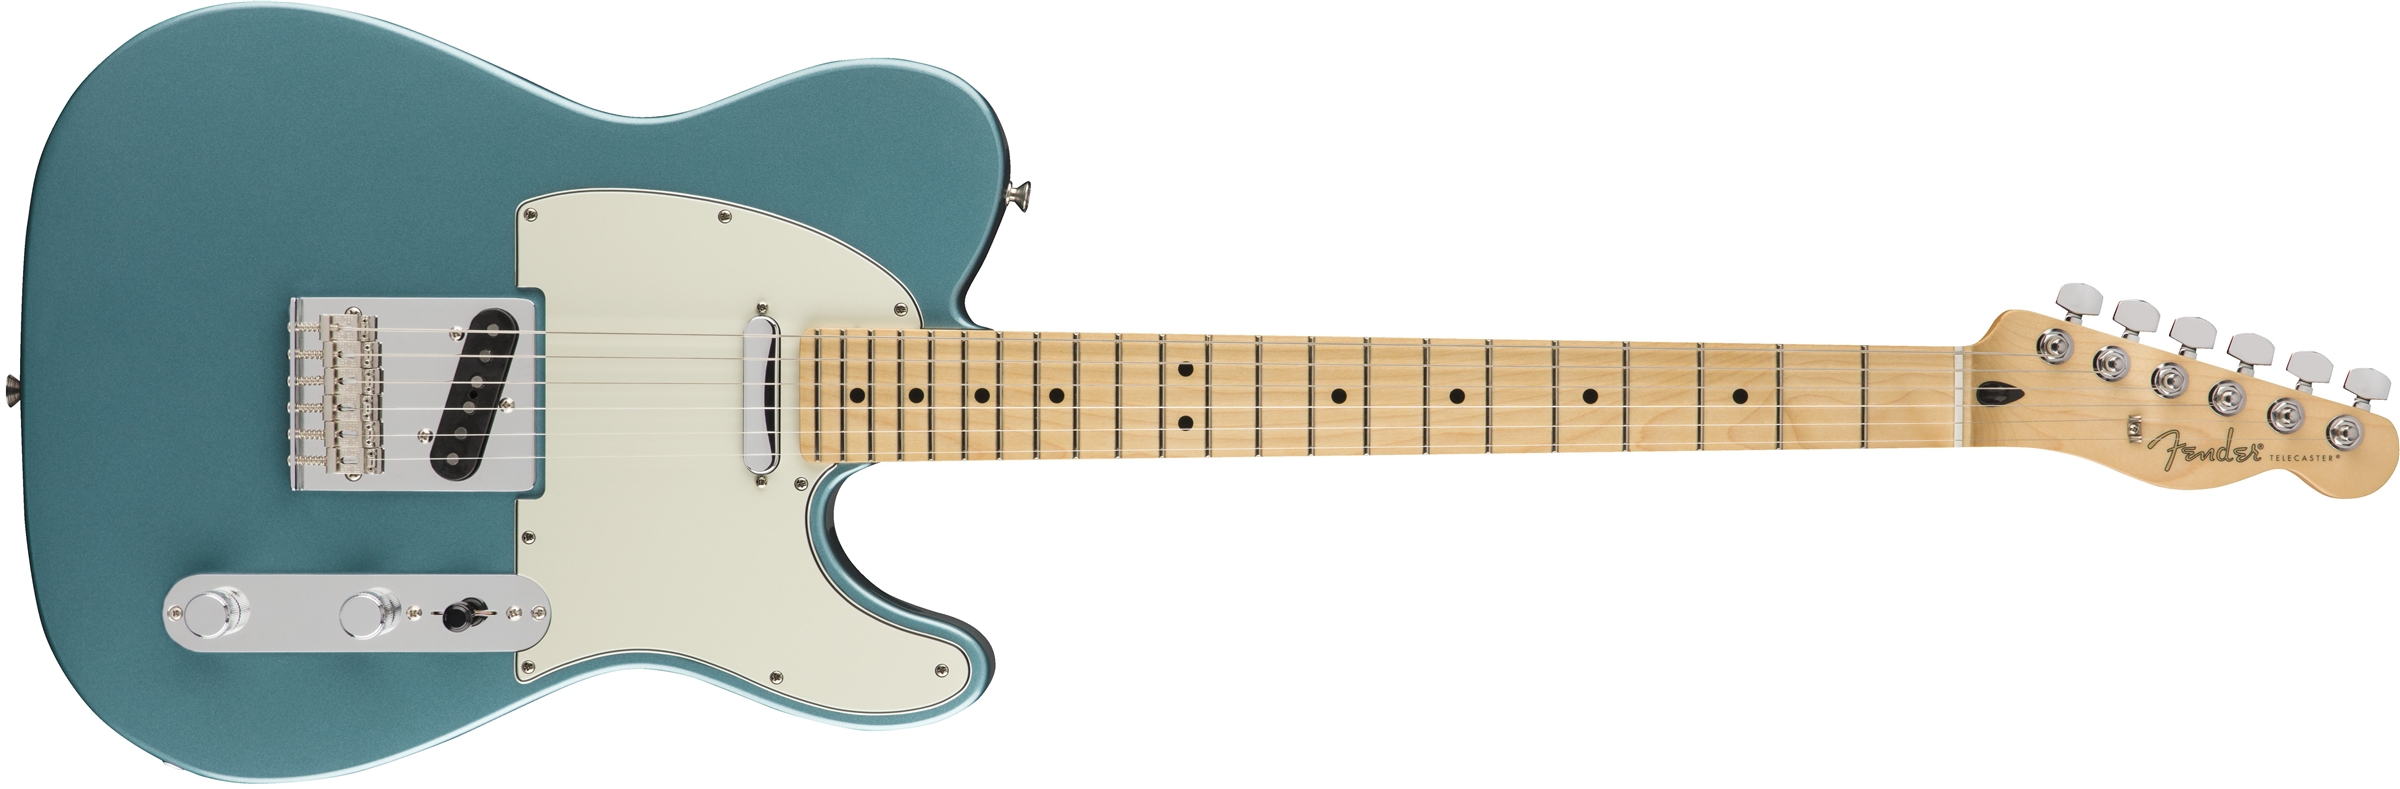 Fender Tele Player Mex Mn - Tidepool - Guitarra eléctrica con forma de tel - Variation 1